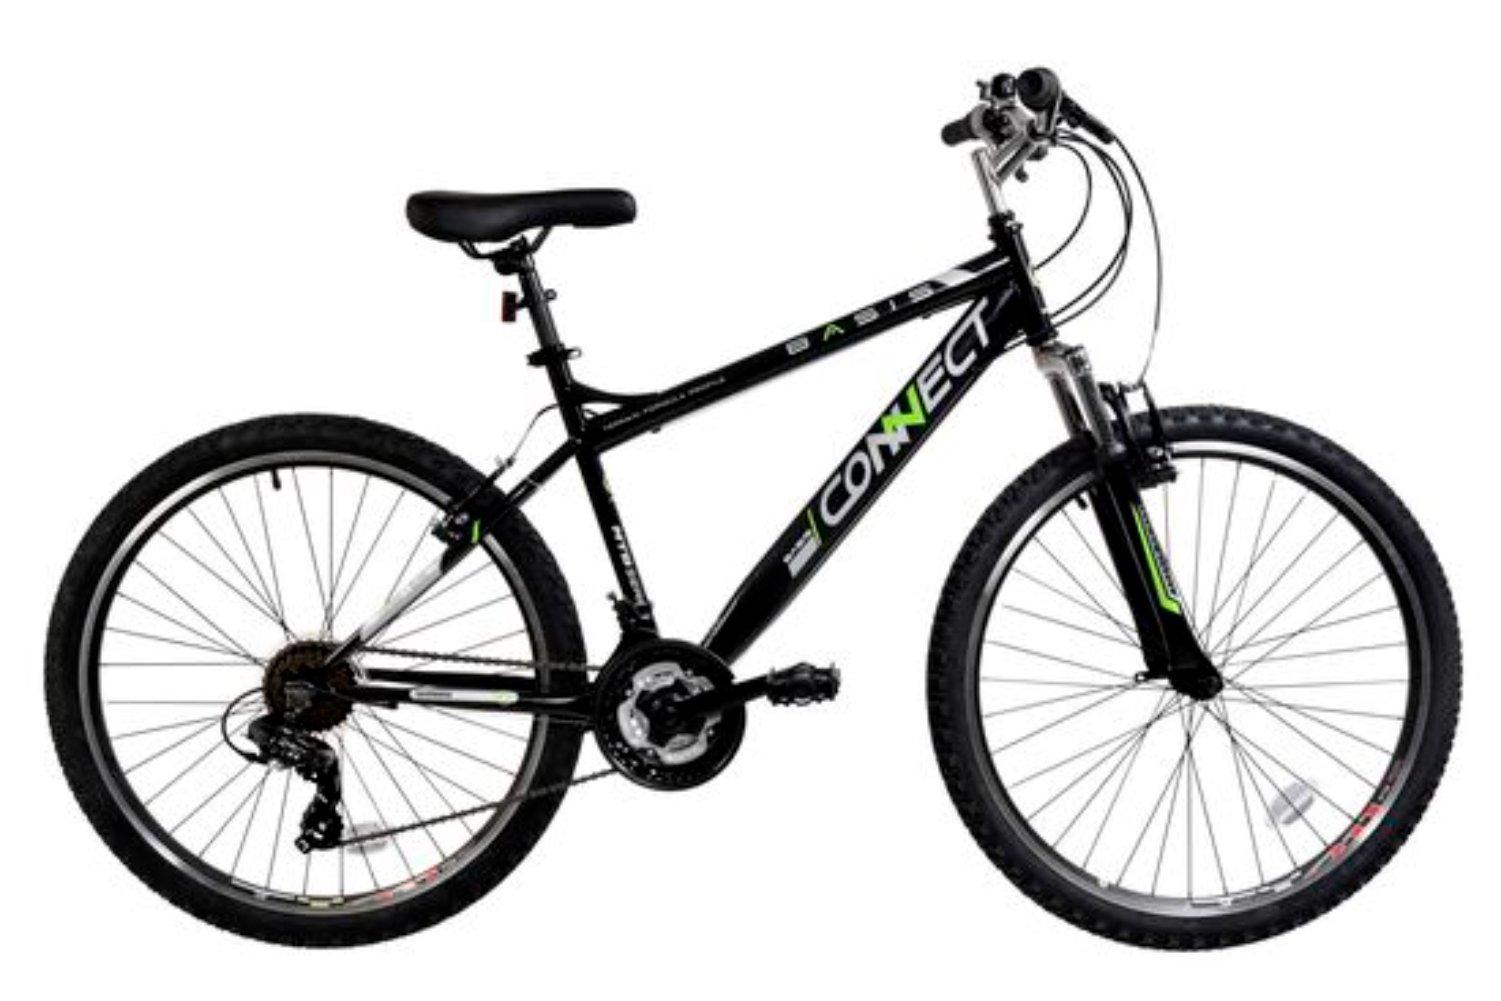 Connect Hardtail Mountain Bike, 26in Wheel - Black/Green